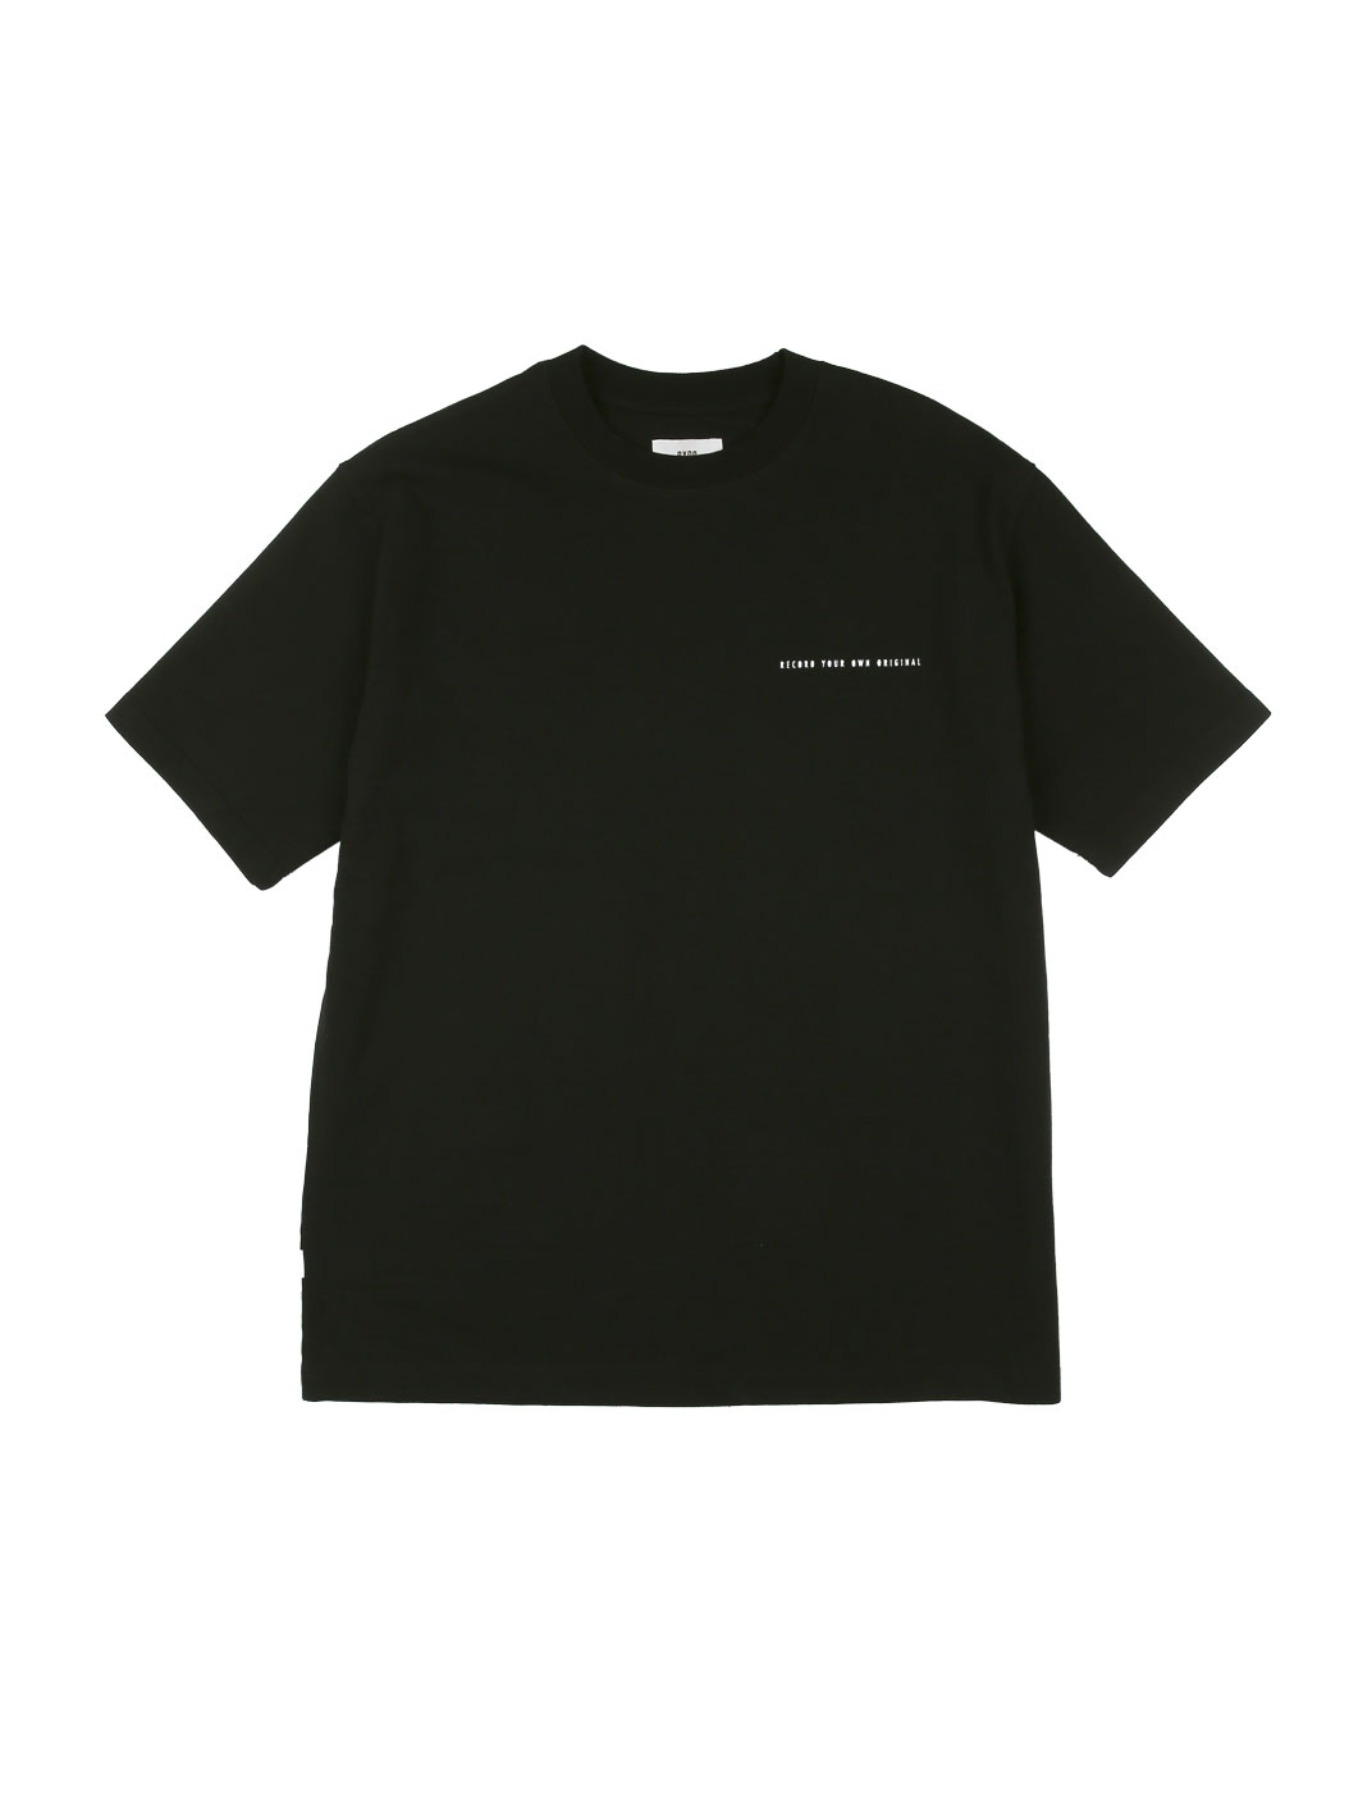 Symmetric blur-print_t-shirts #11 [black]